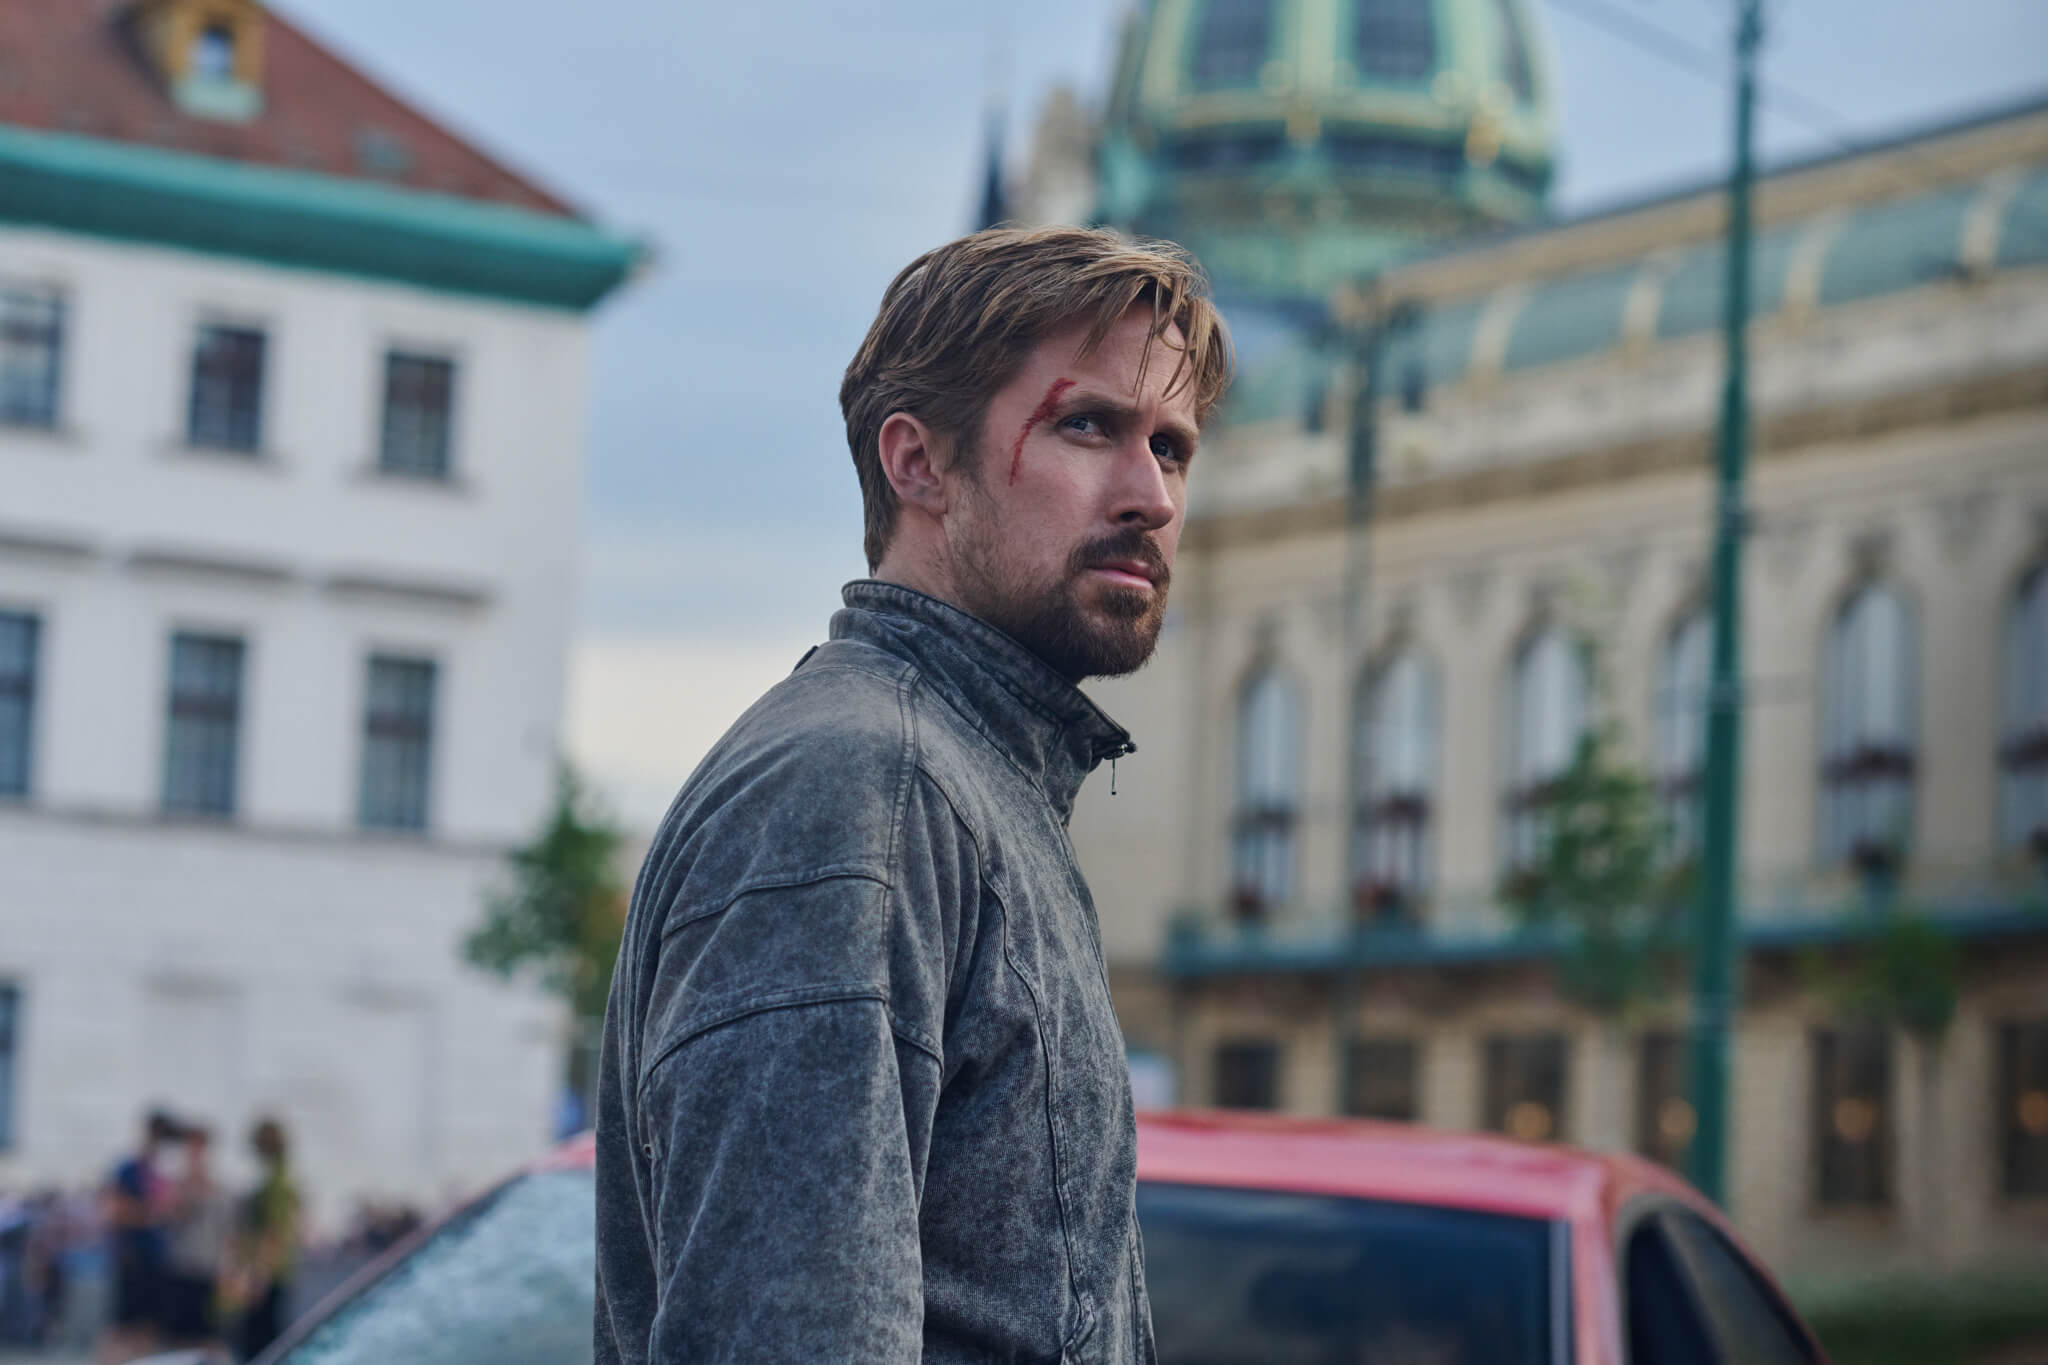 The Gray Man action thriller stars Ryan Gosling